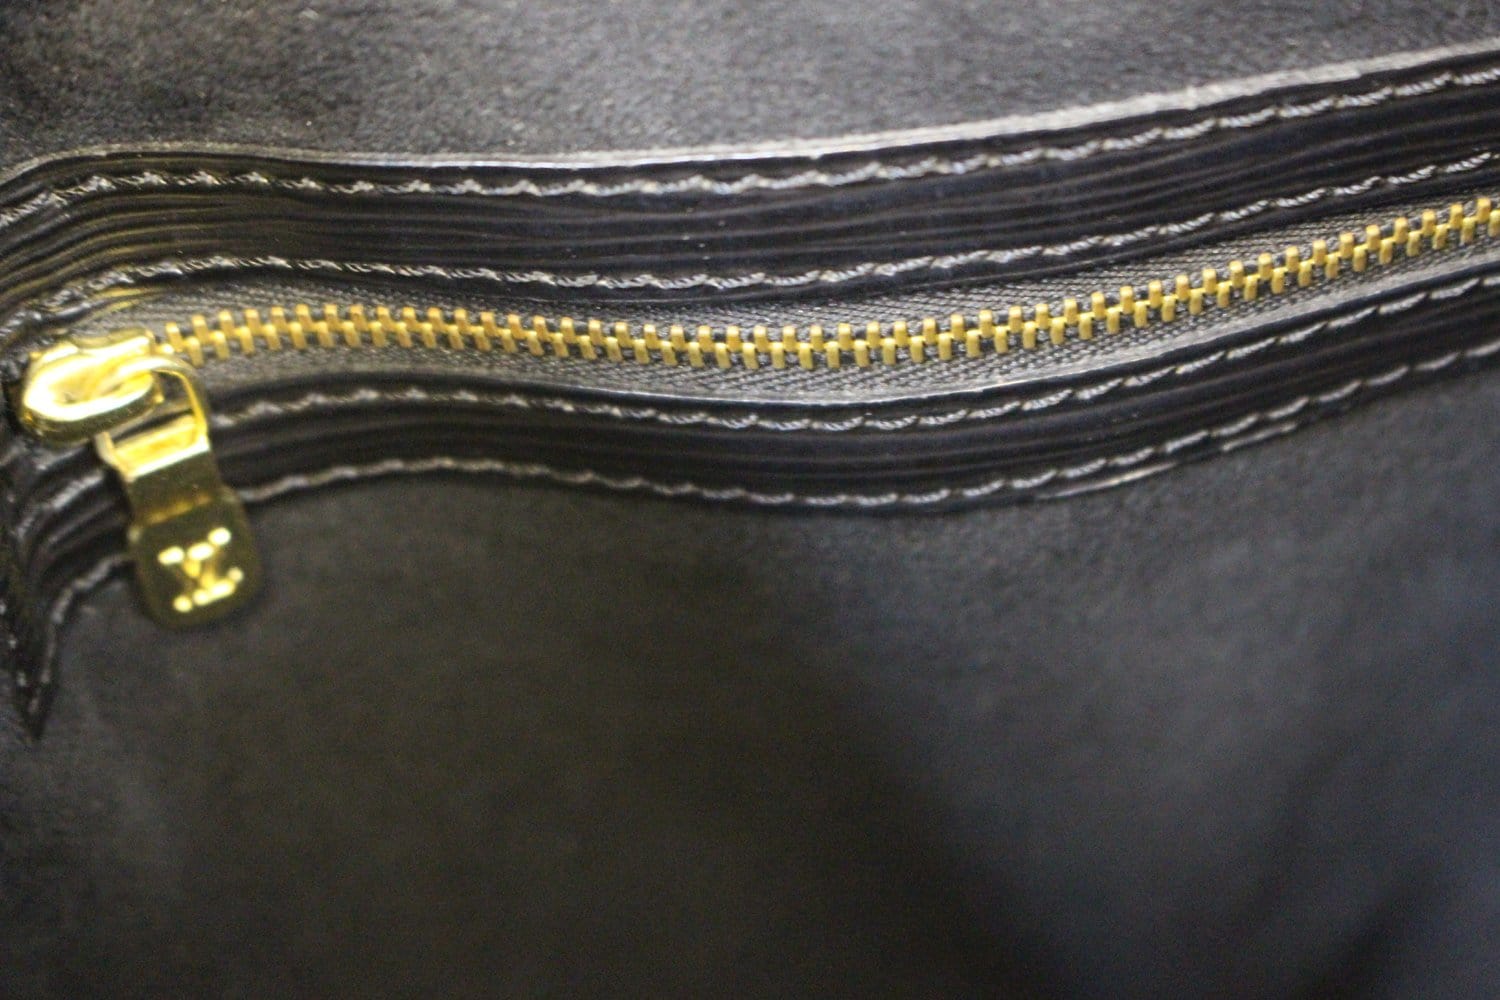 Louis Vuitton Petit Noè shoulder bag in two-tone epi leather